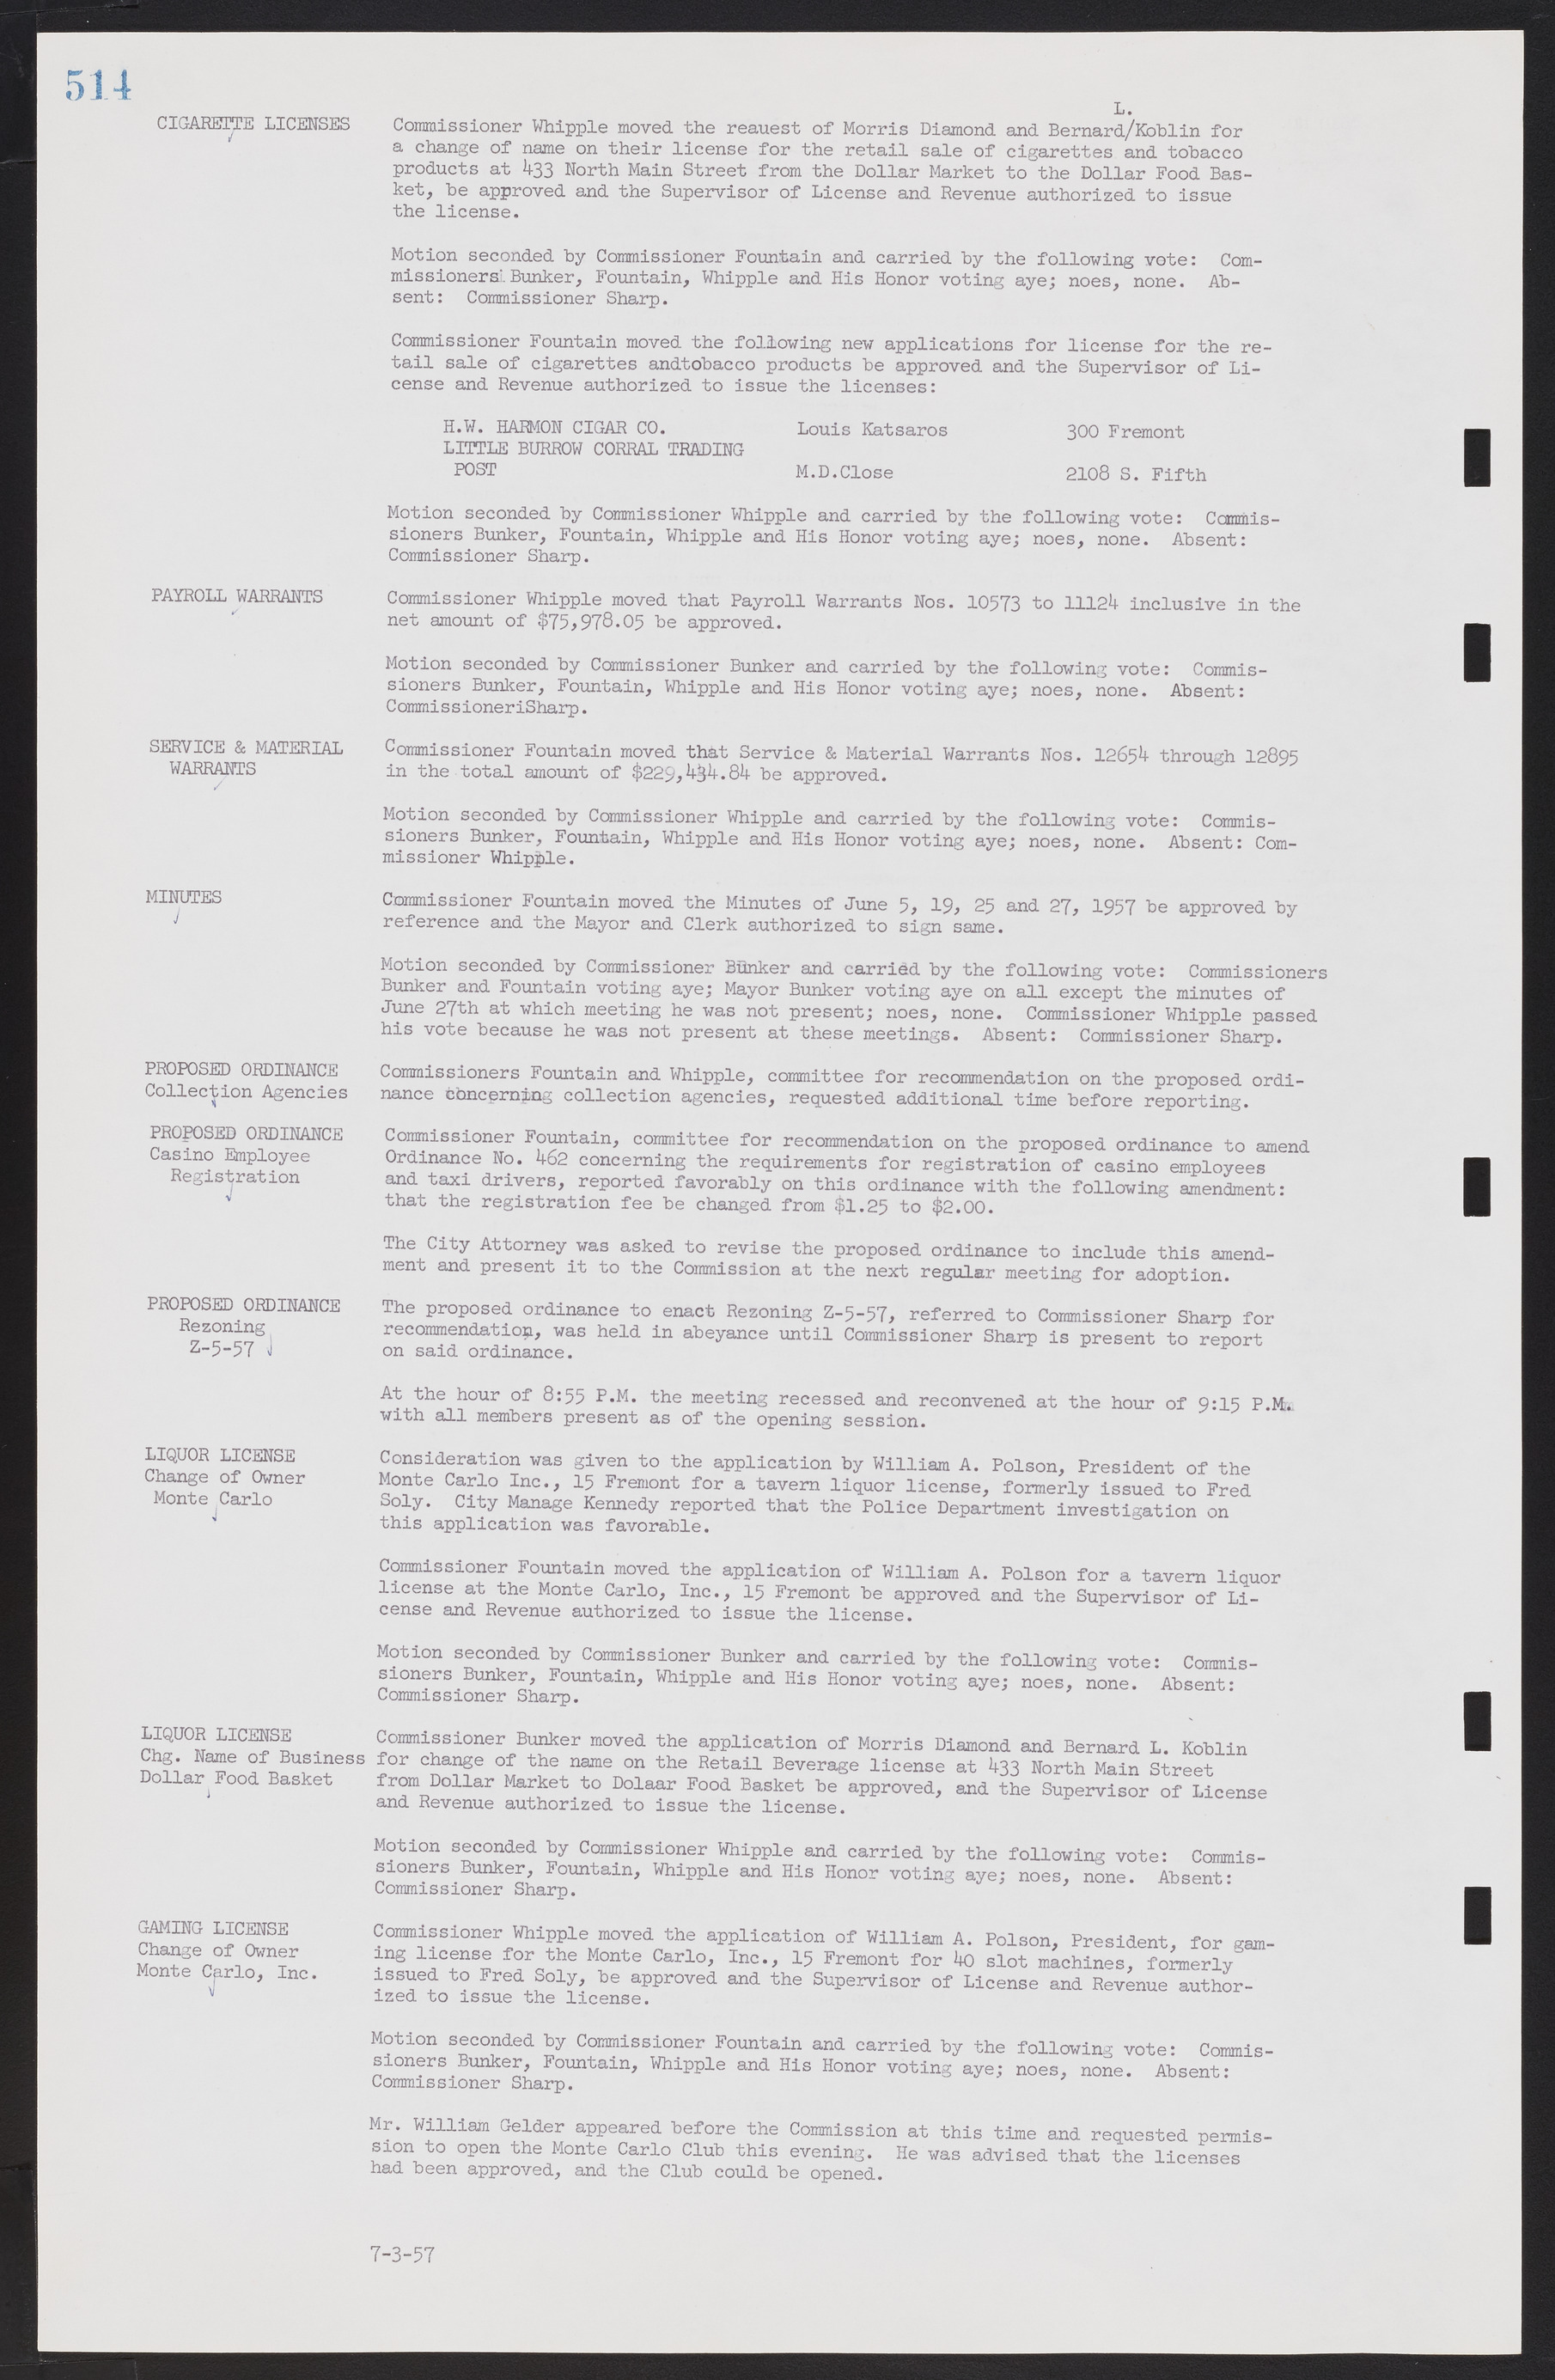 Las Vegas City Commission Minutes, September 21, 1955 to November 20, 1957, lvc000010-534